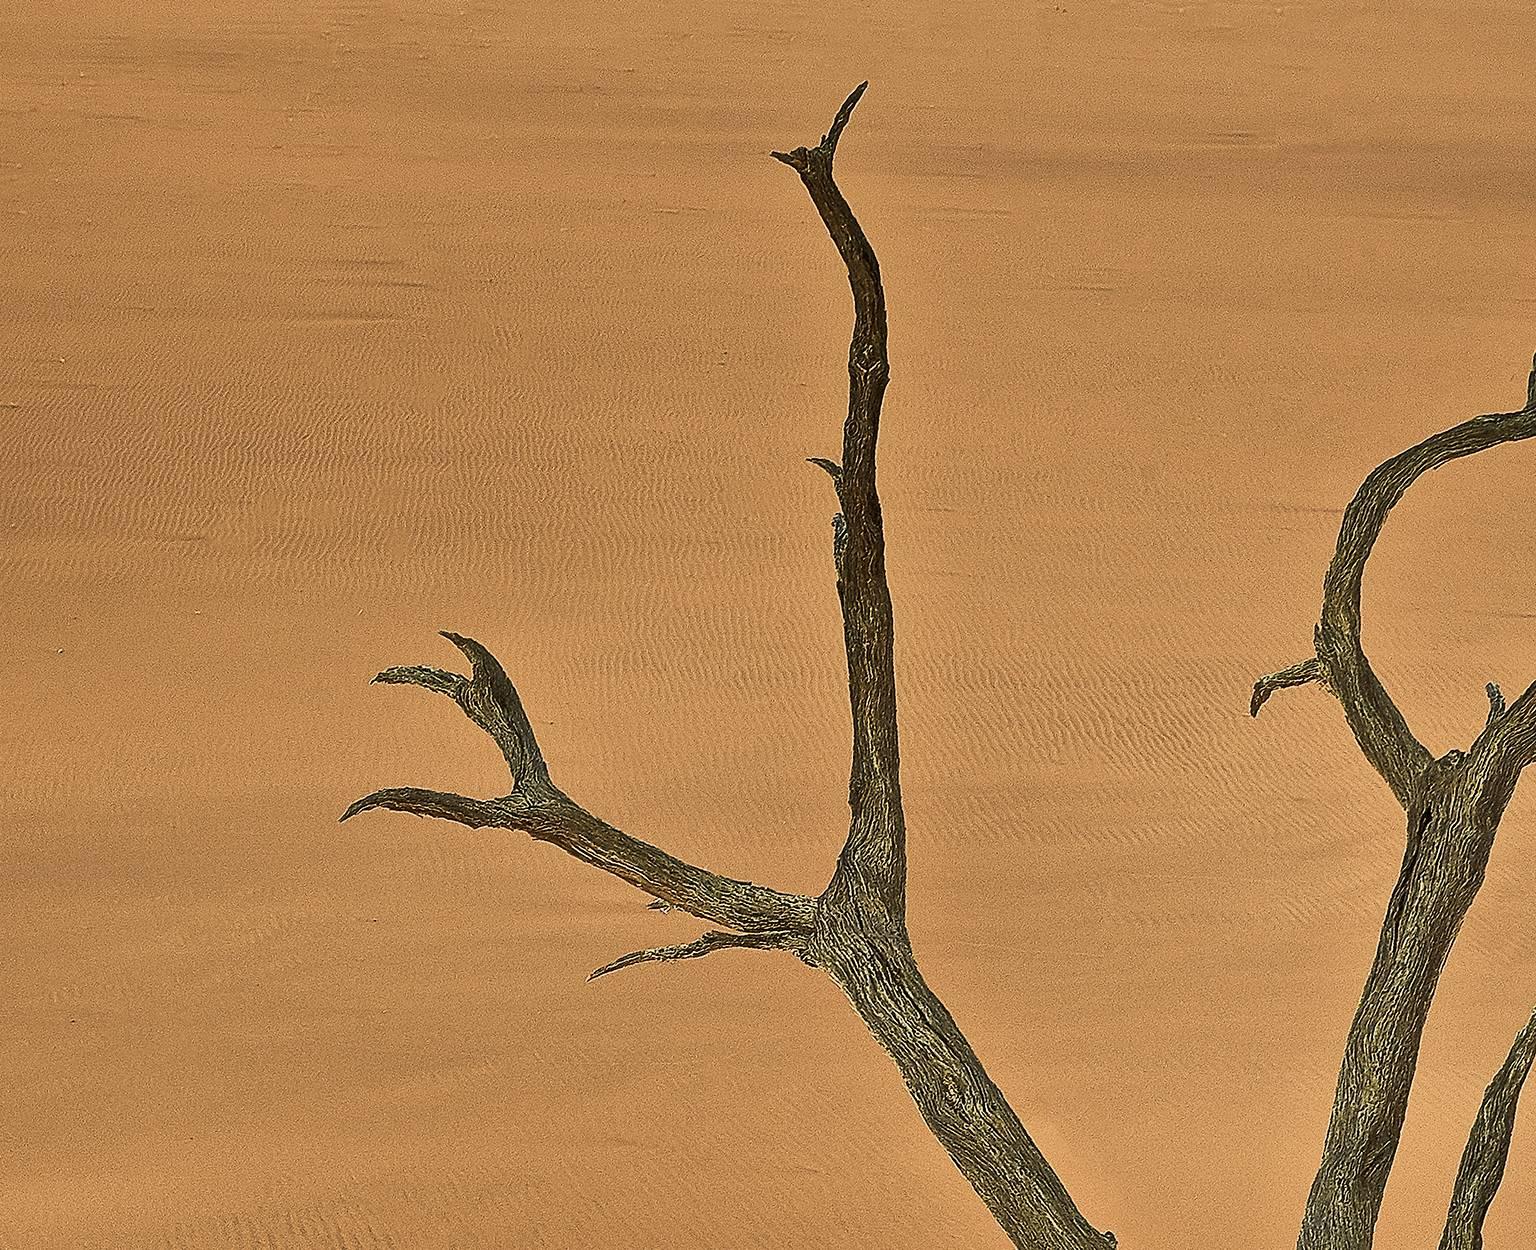 Dead Vlei, Namibia - Photograph by Chris Gordaneer